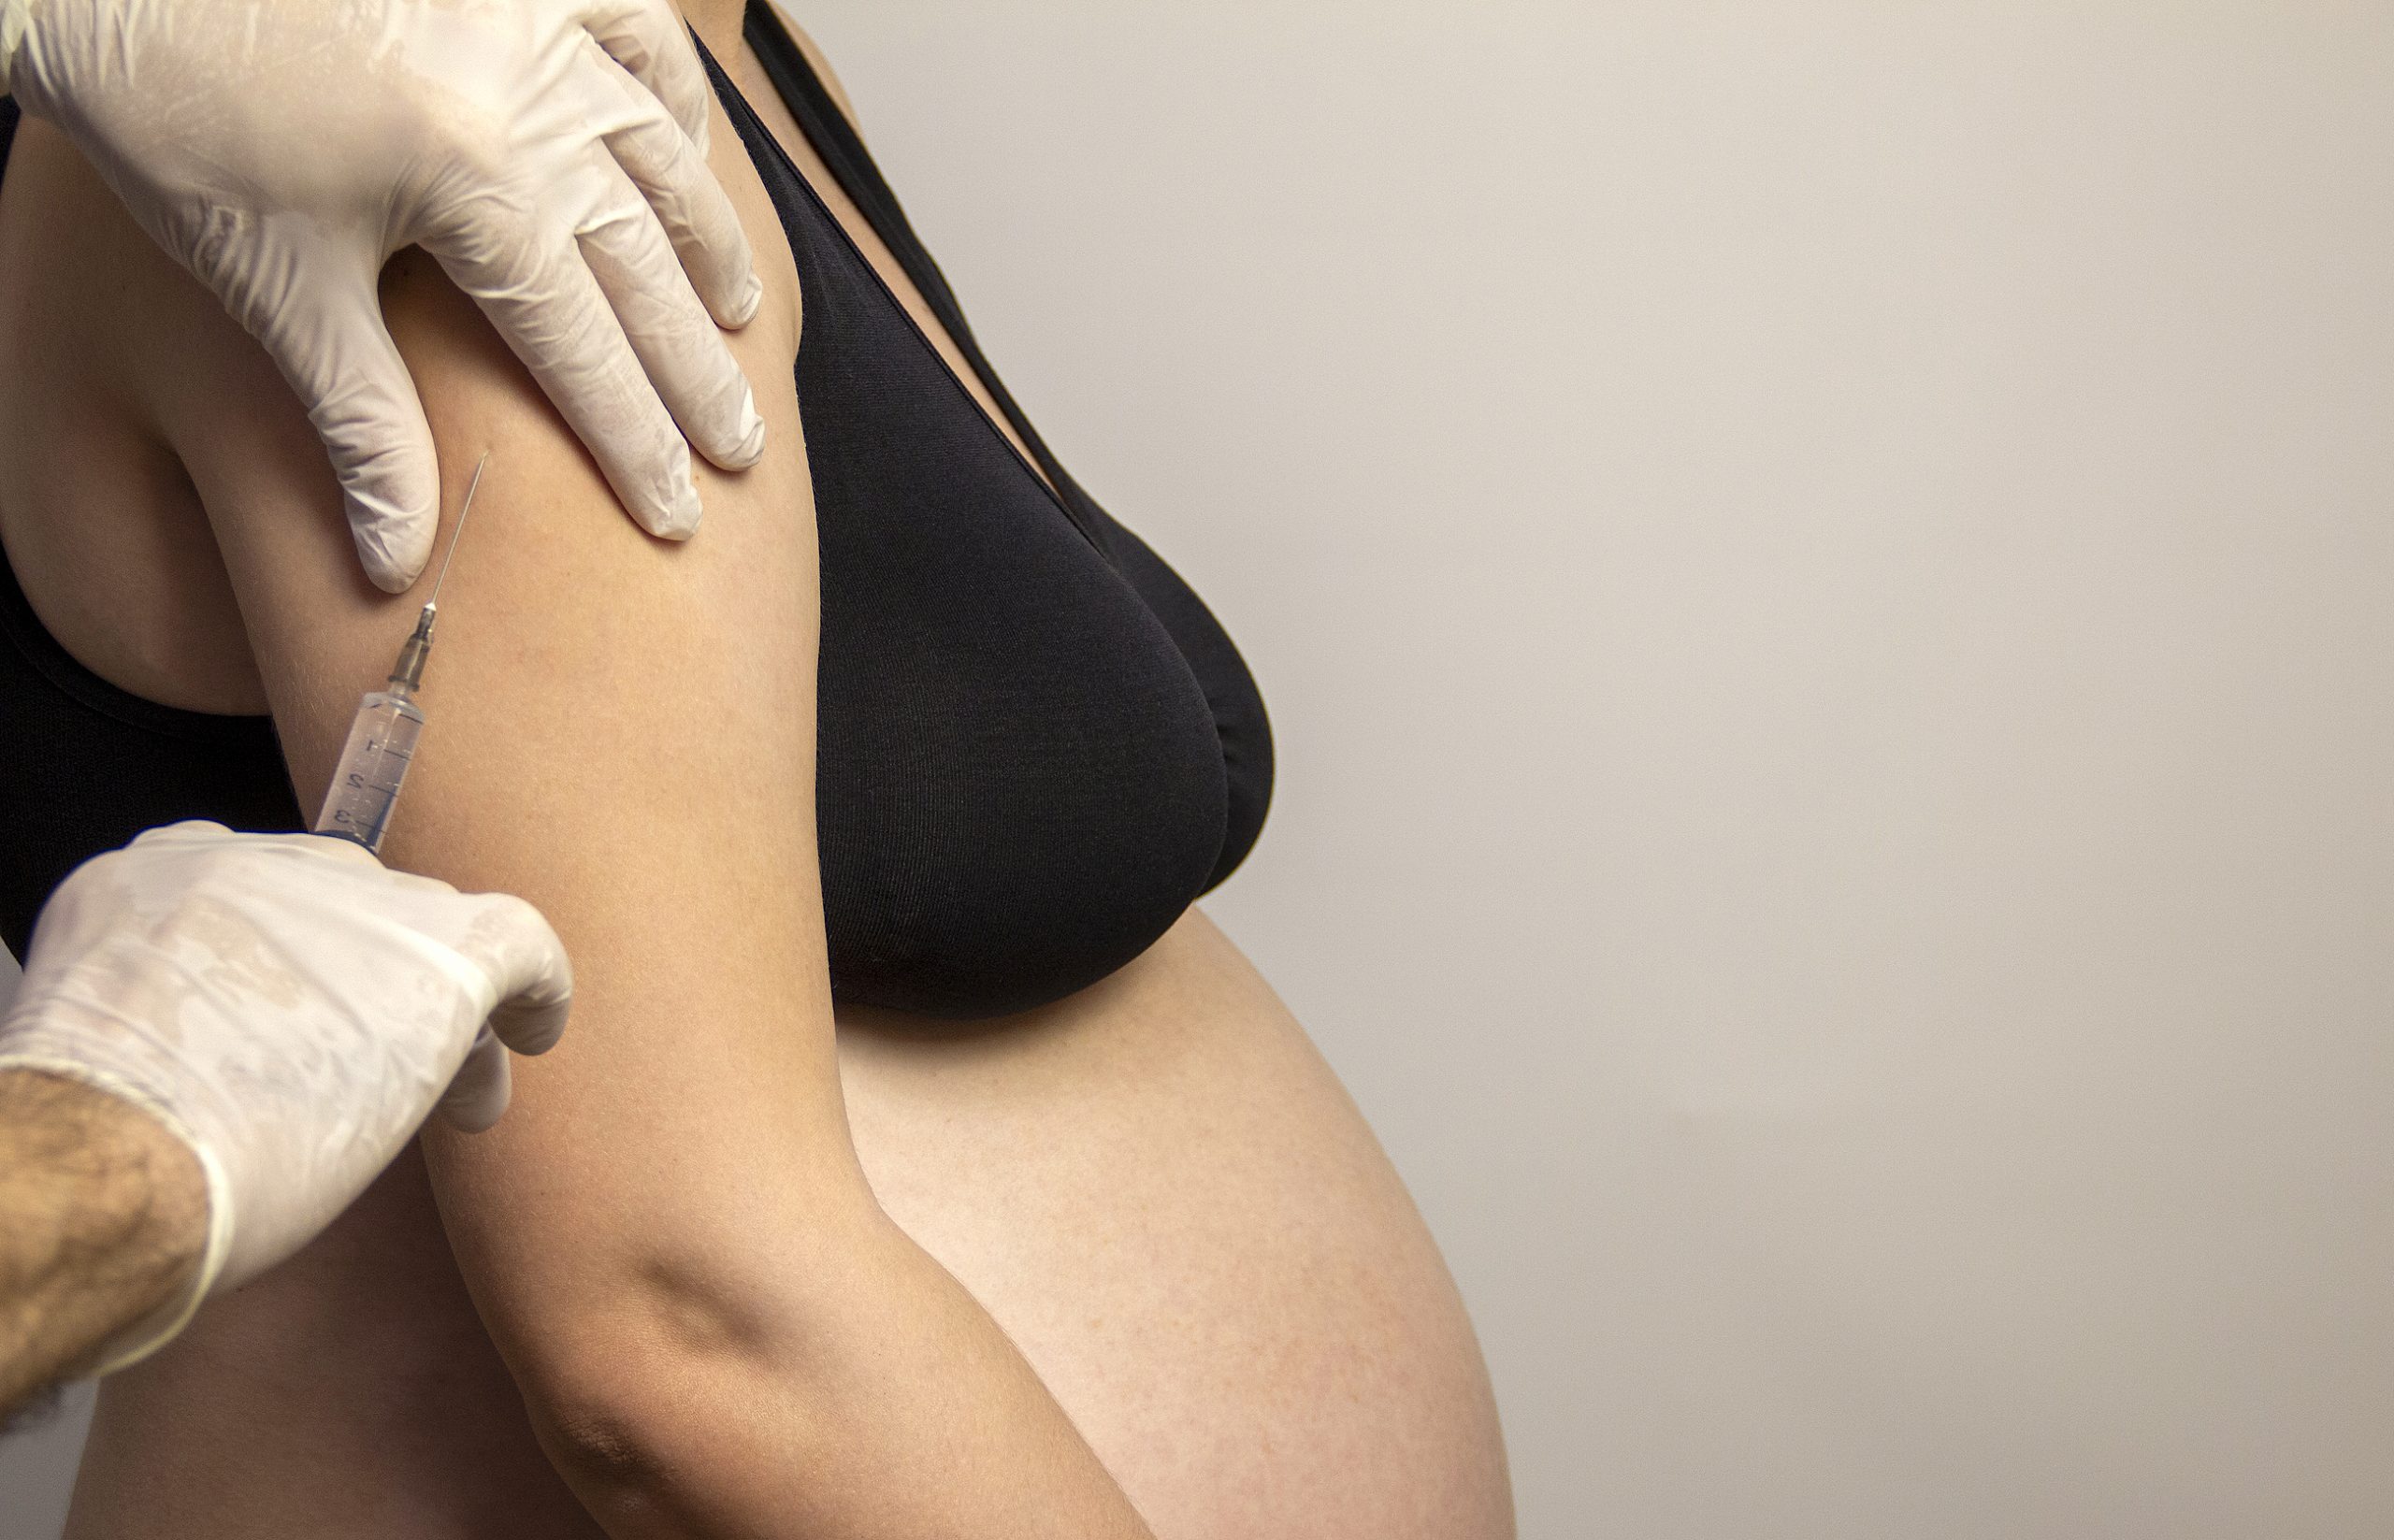 Vacuna Tdap en el embarazo reduce la tosferina en bebés